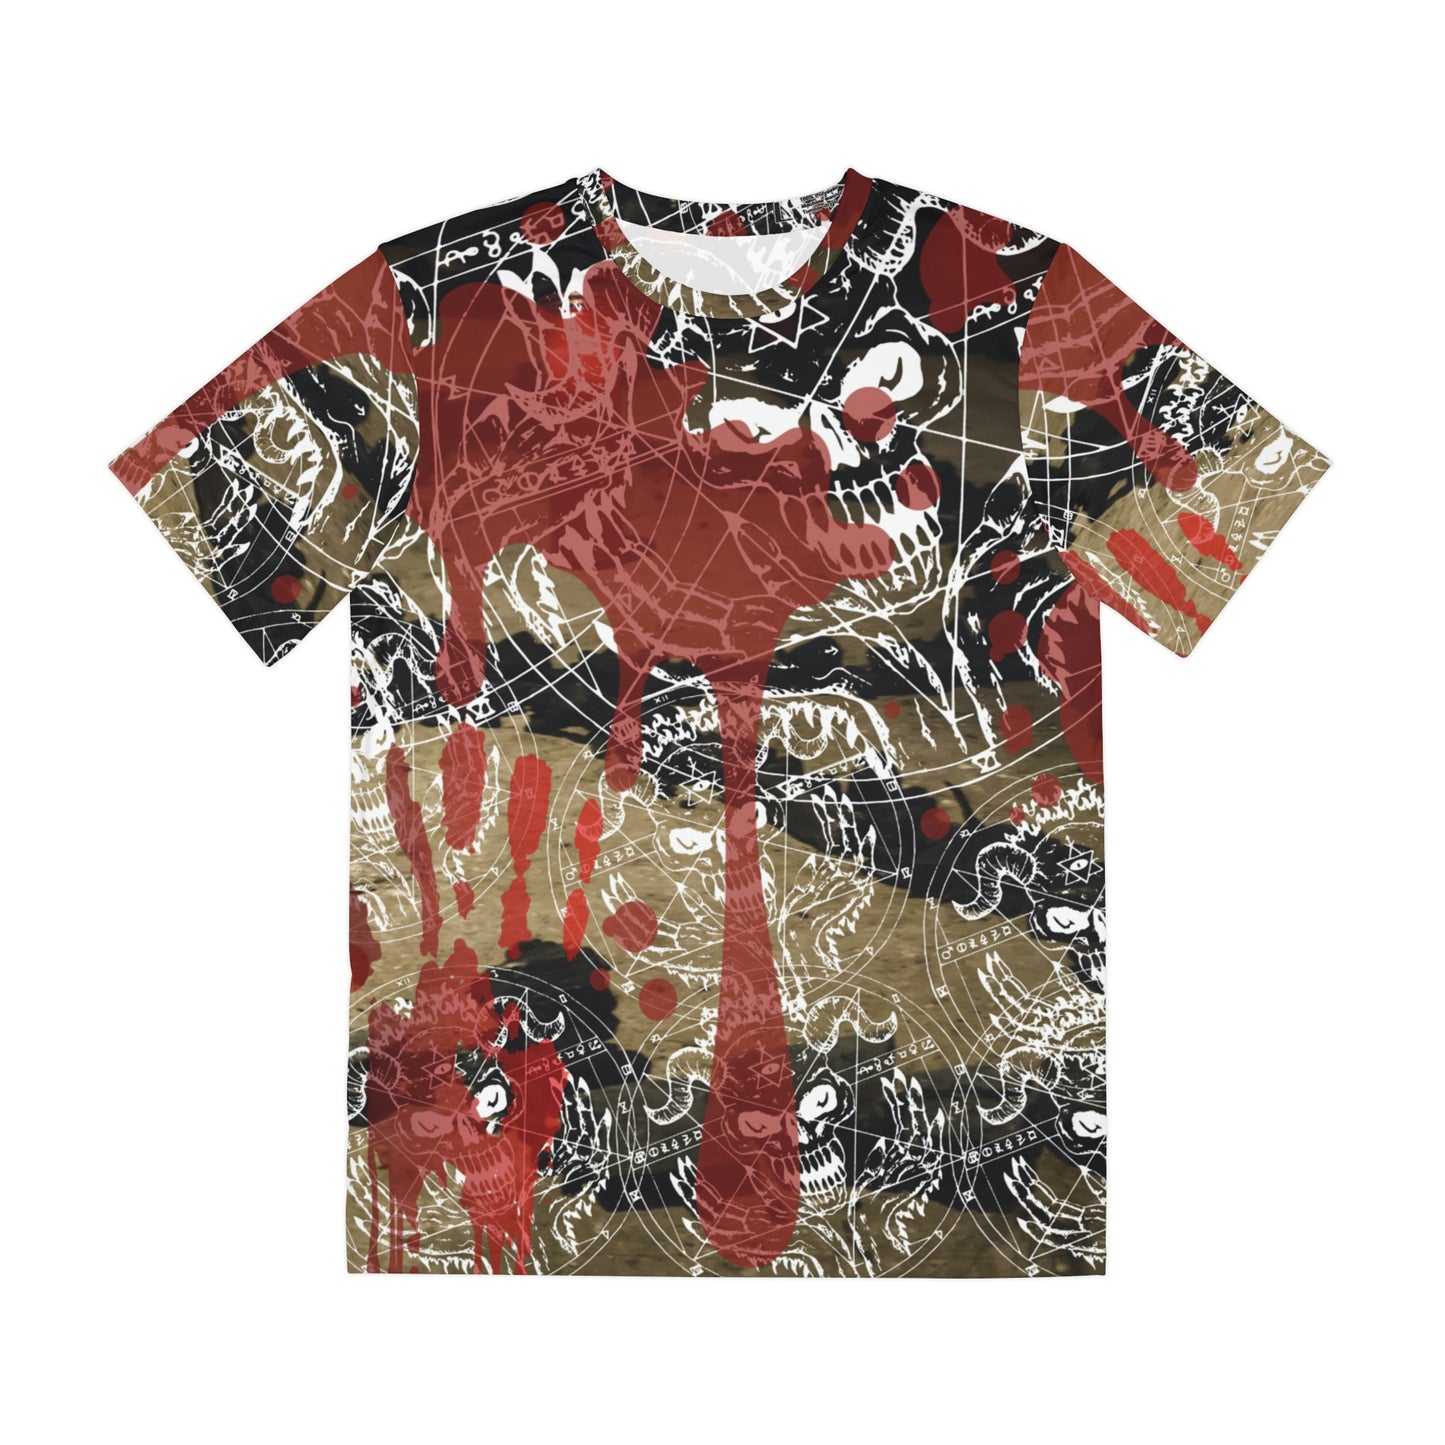 Gothic Grunge Streetwear Shirt, Abstract Alternative Crewneck Graphic Tee